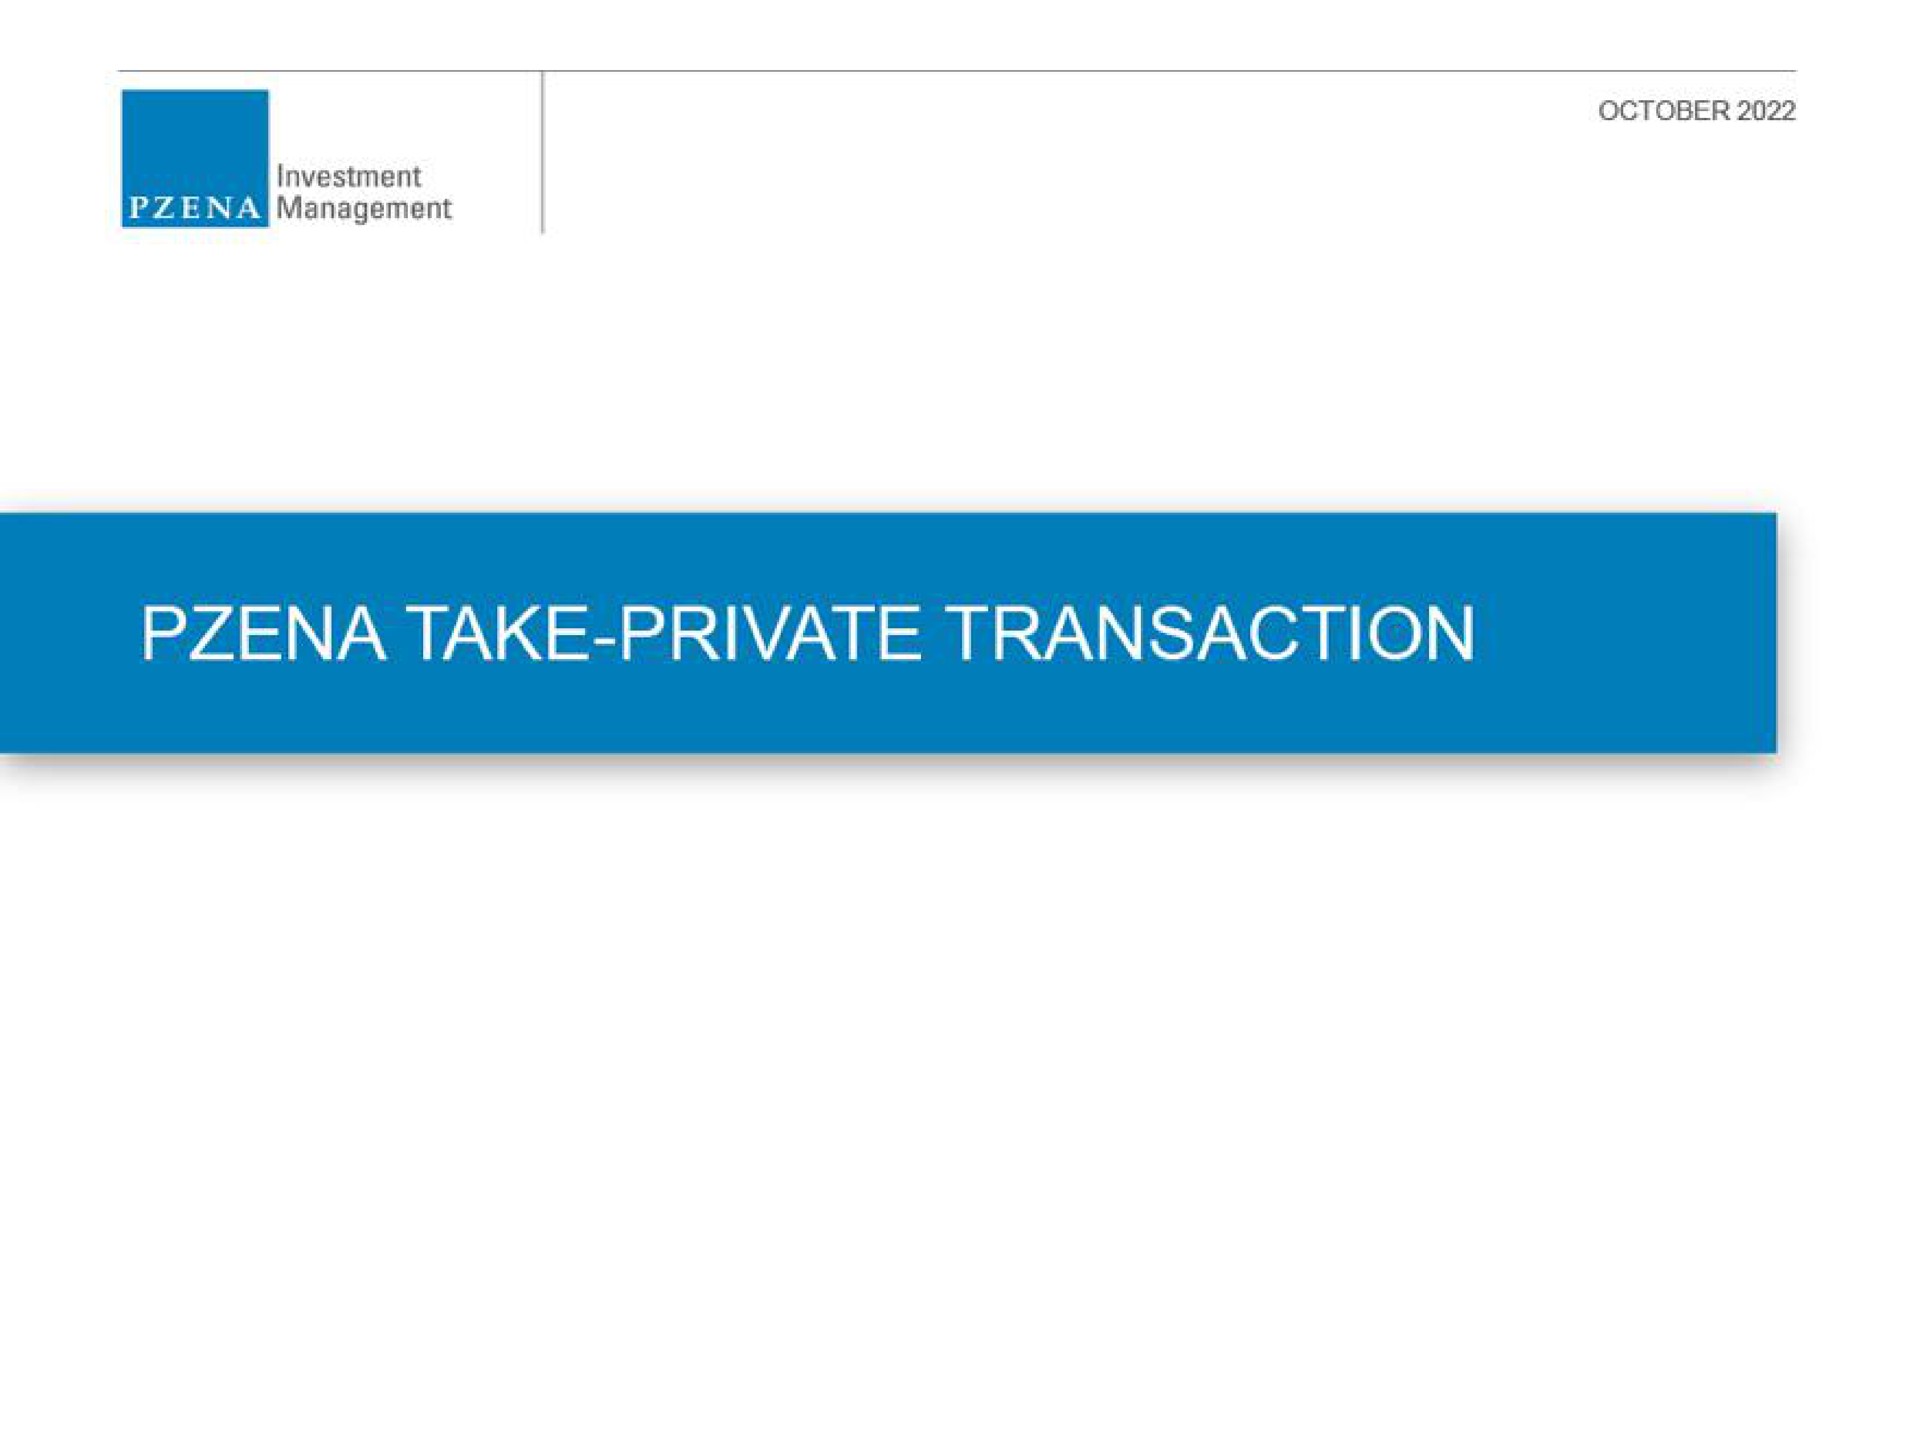 take private transaction | Pzena Investment Management